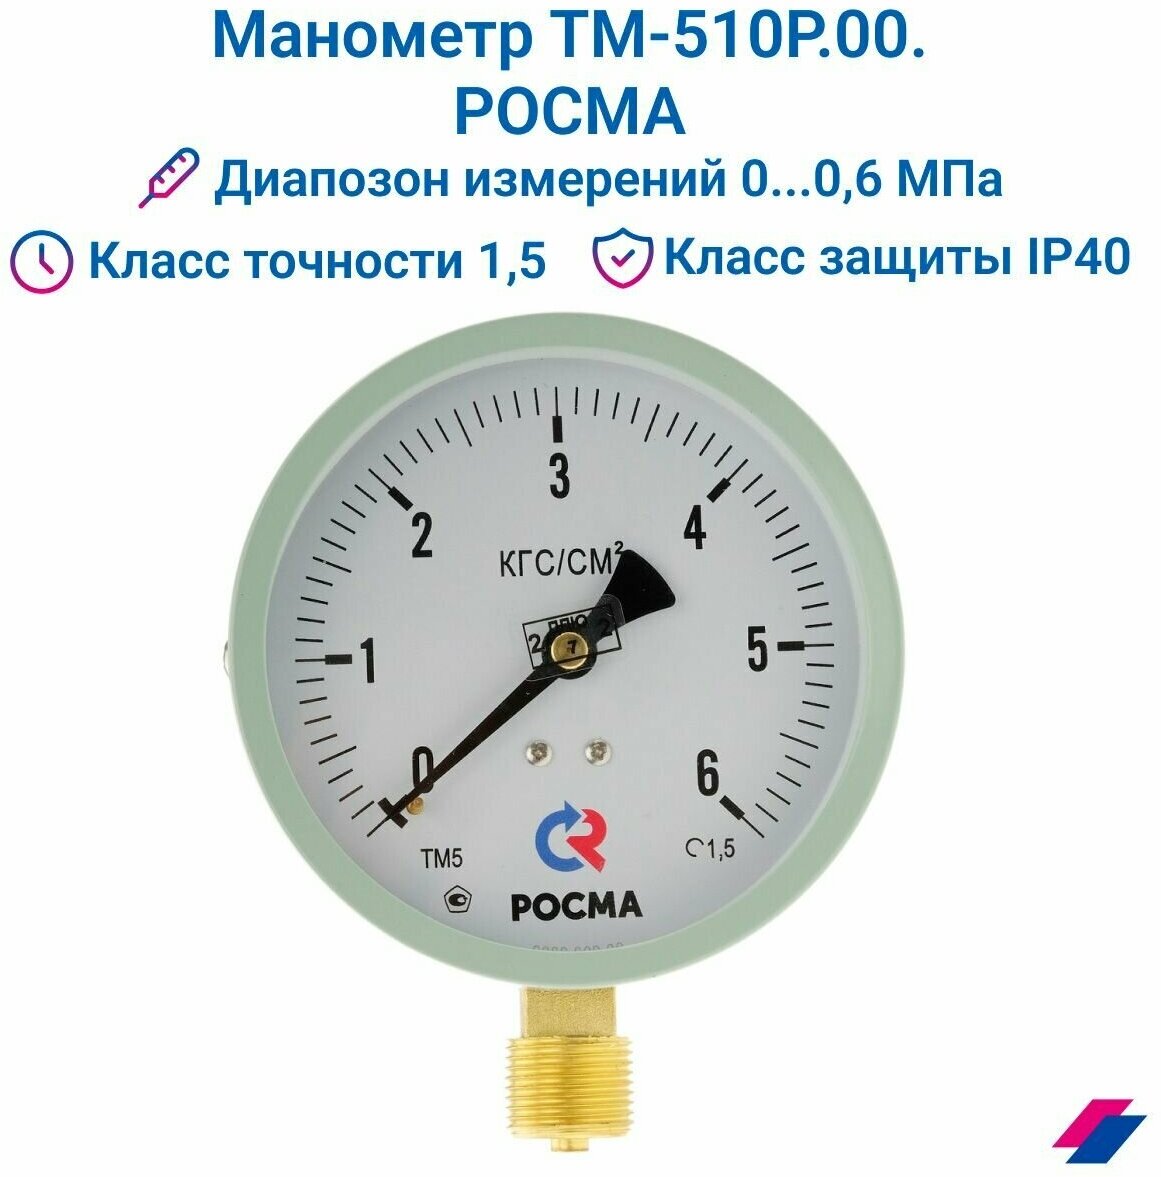 Манометр ТМ-510Р.00 (0.0,6 МРа) М20х1,5: класс точности -1,5 росма